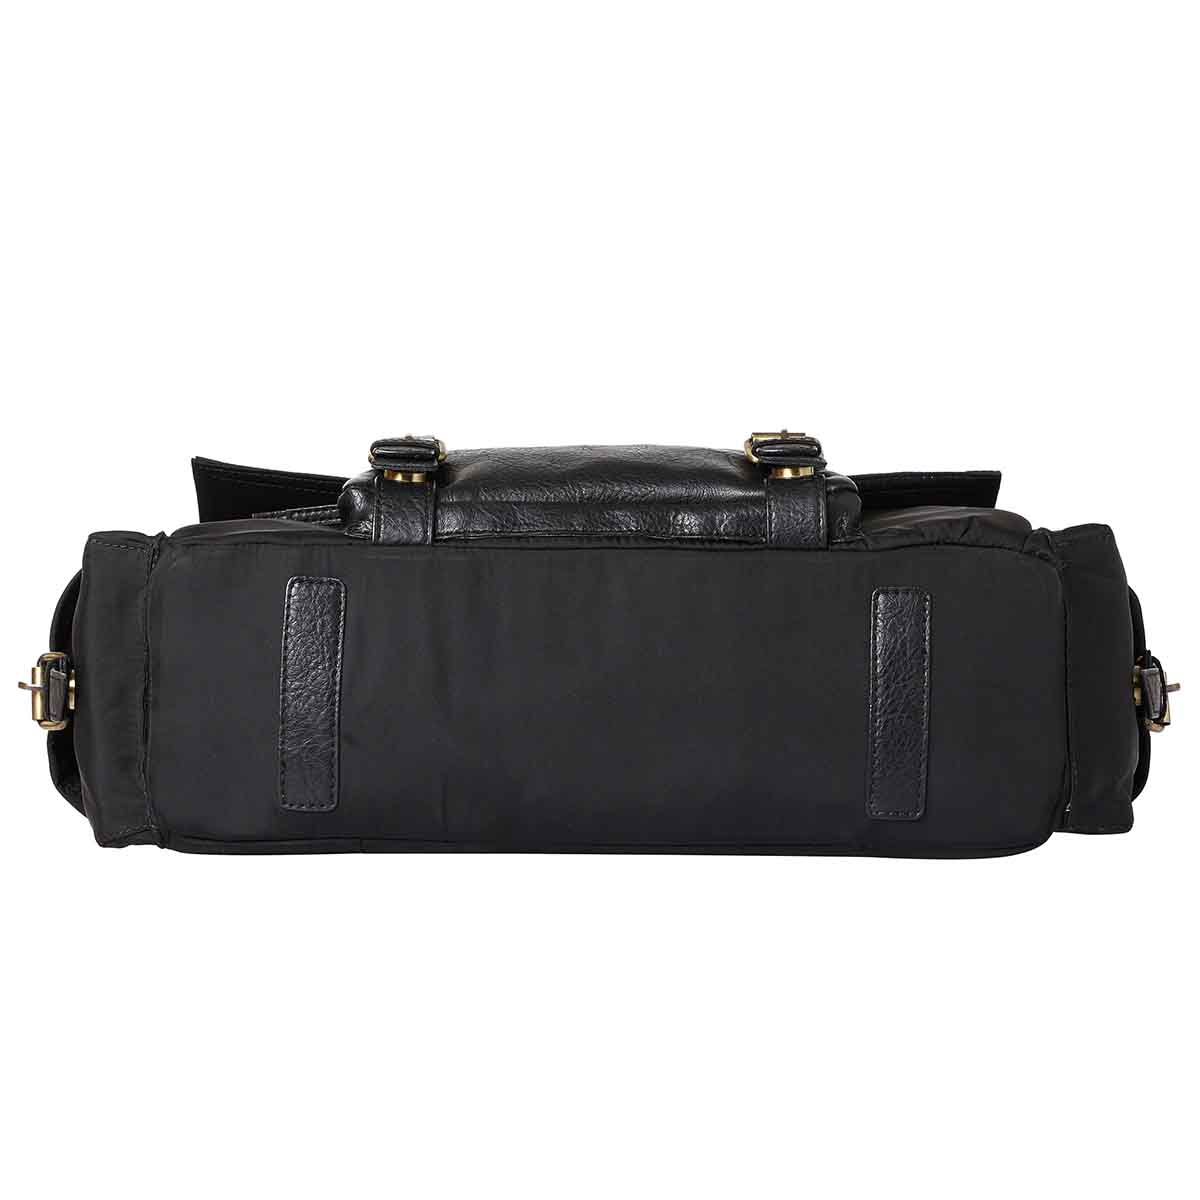 Mona B Unisex Messenger Bag for upto 14" Laptop/Mac Book/Tablet with Stylish Design: Hudson Black - RP-307 BLK